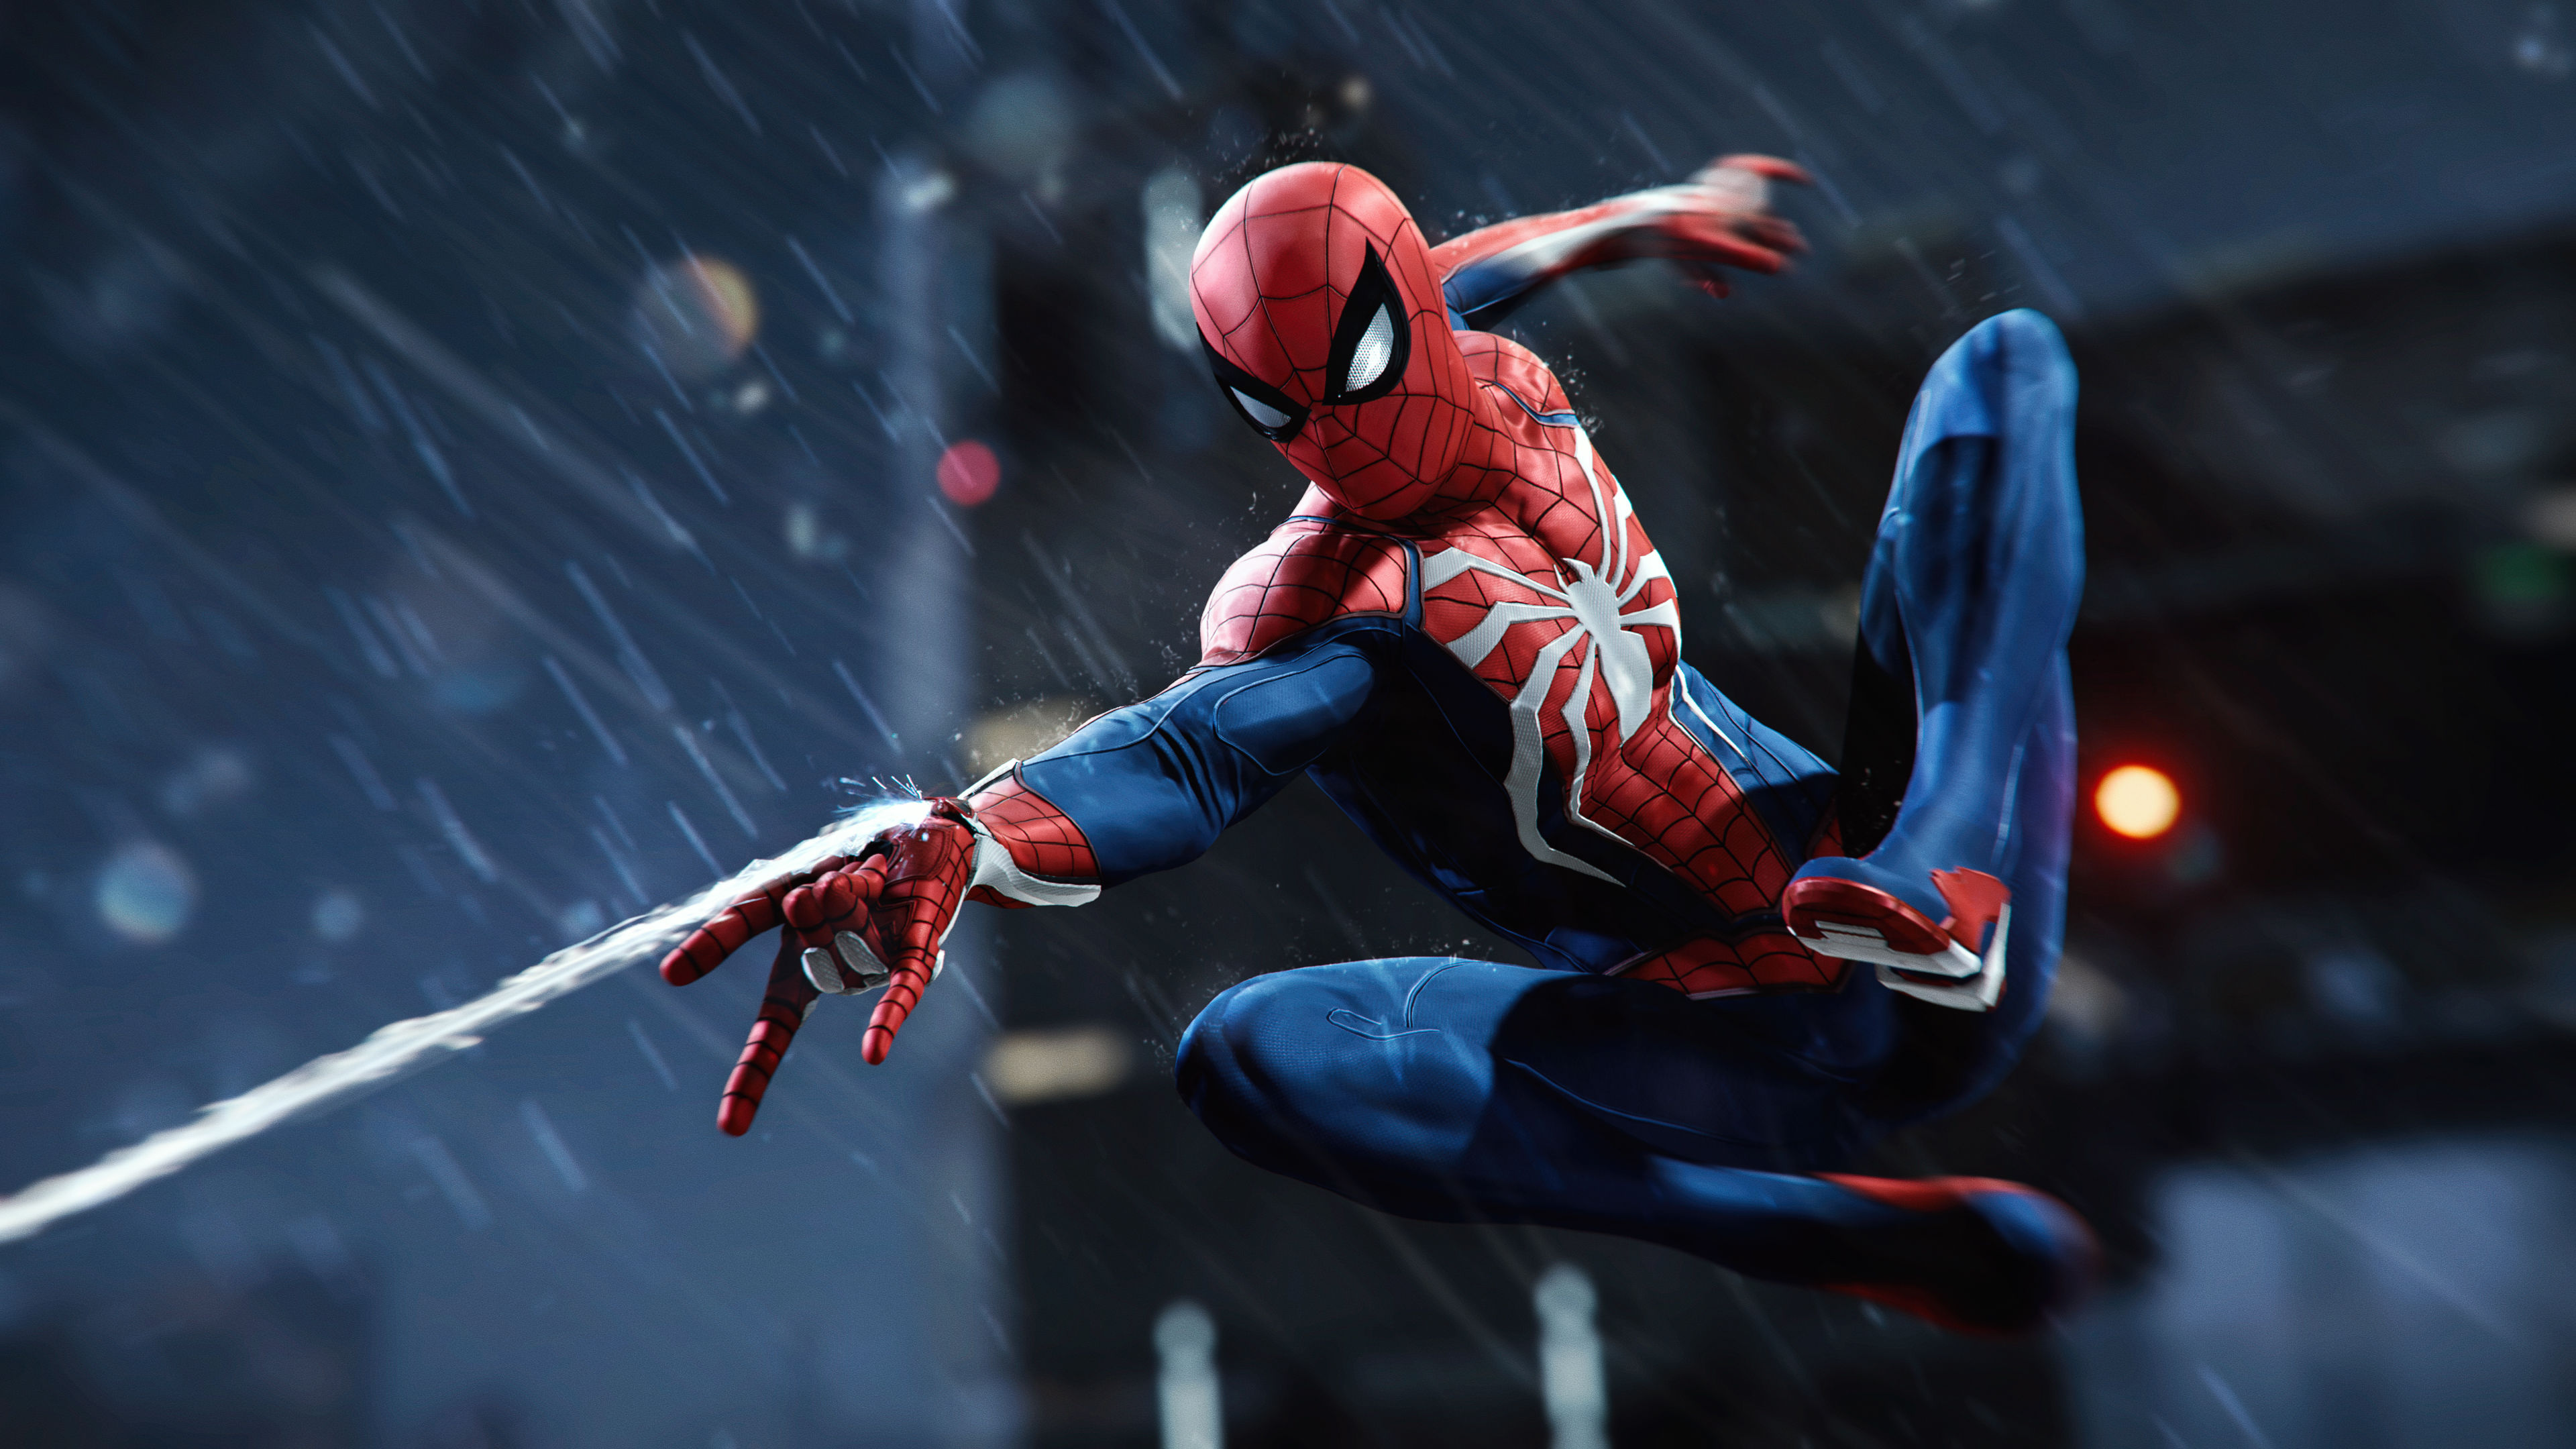 Spider-Man PS4 Game Trailer: Peter Parker Meets Insomniac Games